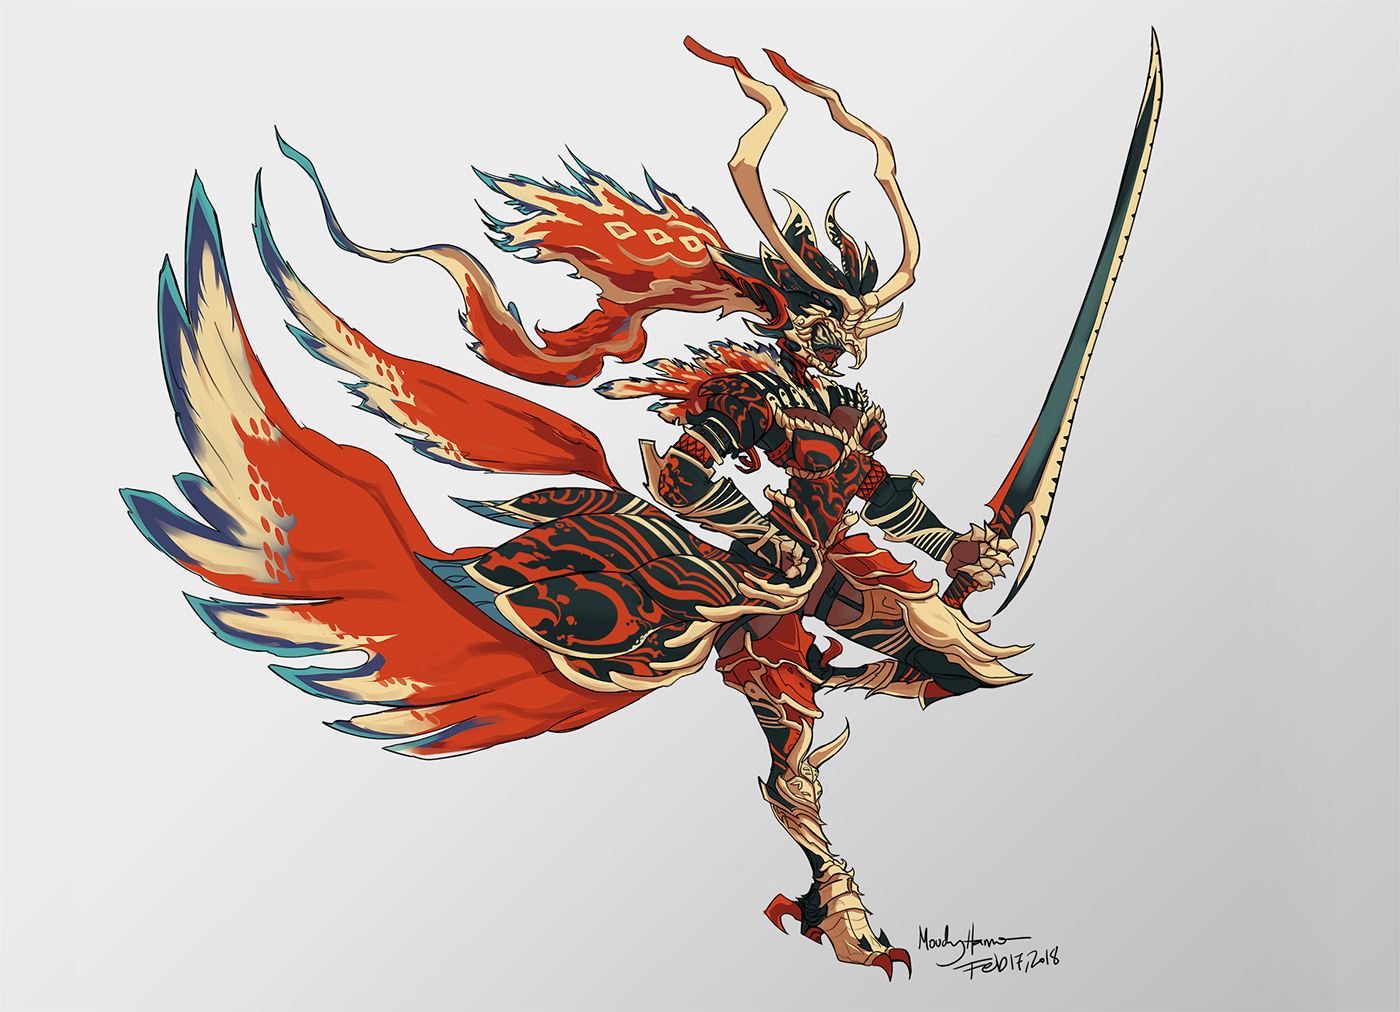 Armor video game warrior Monster Hunter inspiration fantasy wings Swords woman